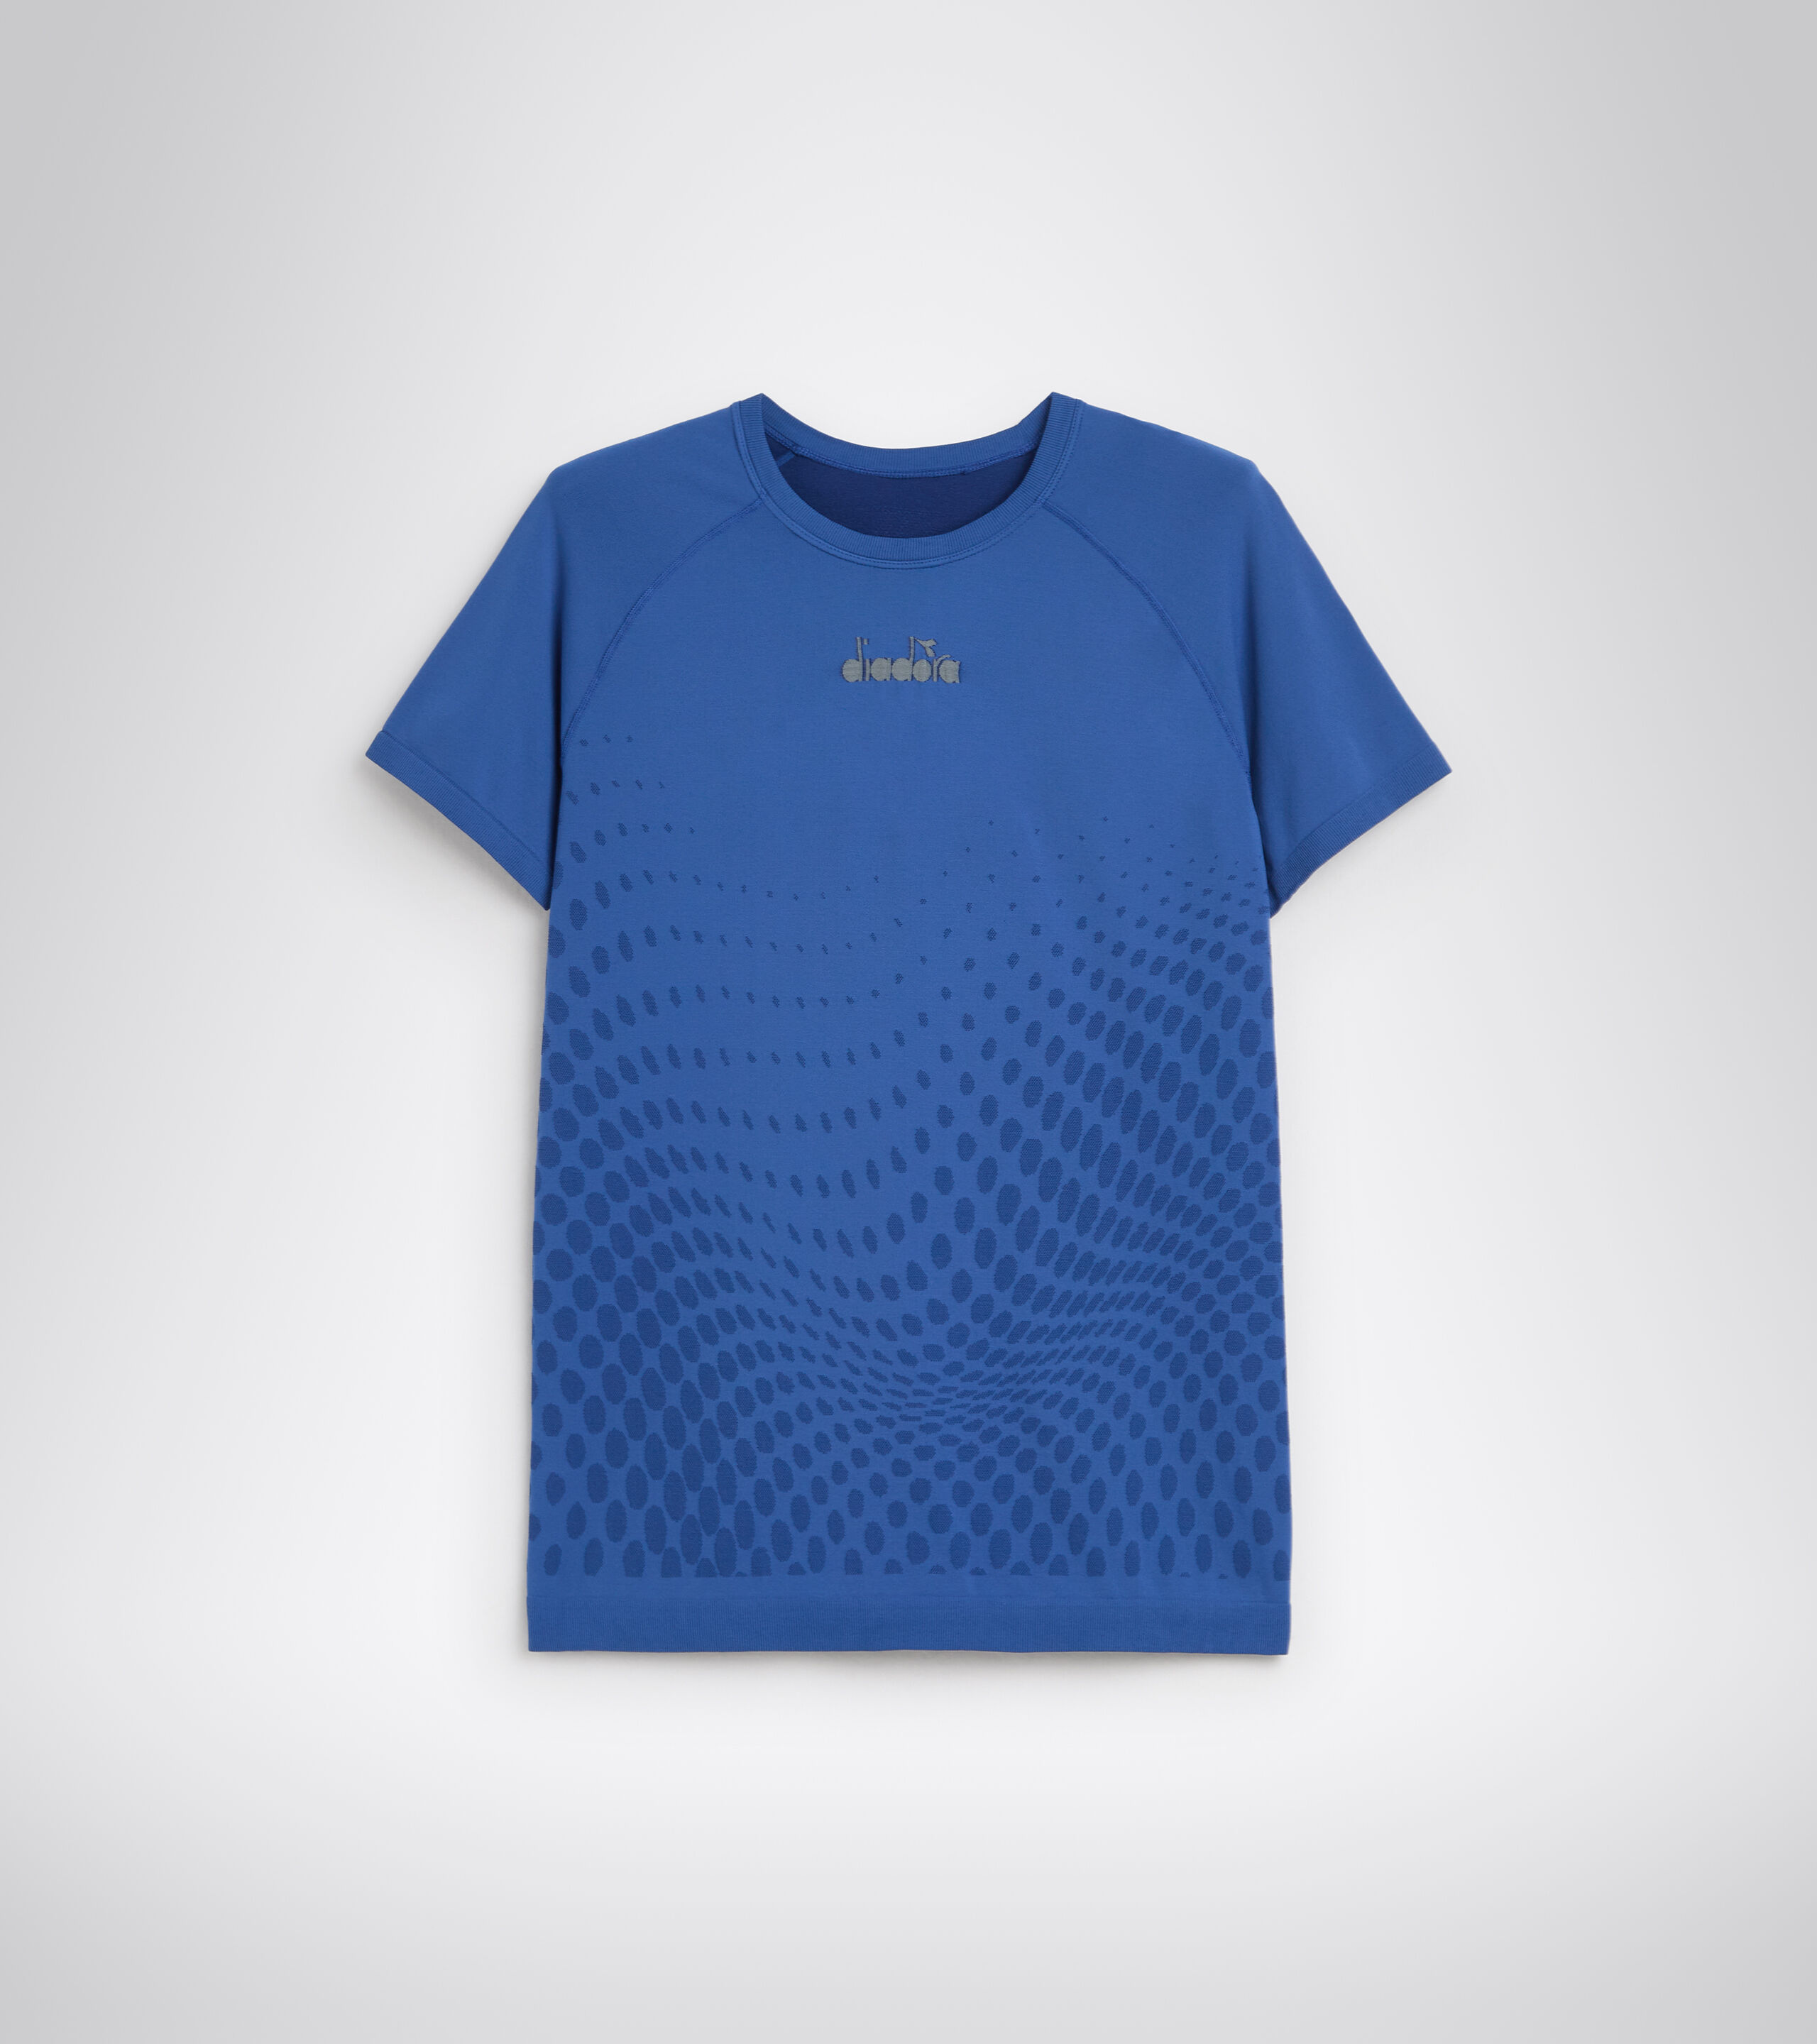 Top Design Topqualität *50%SALE DIADORA Funktions-T-shirt ShortSleeve blau 